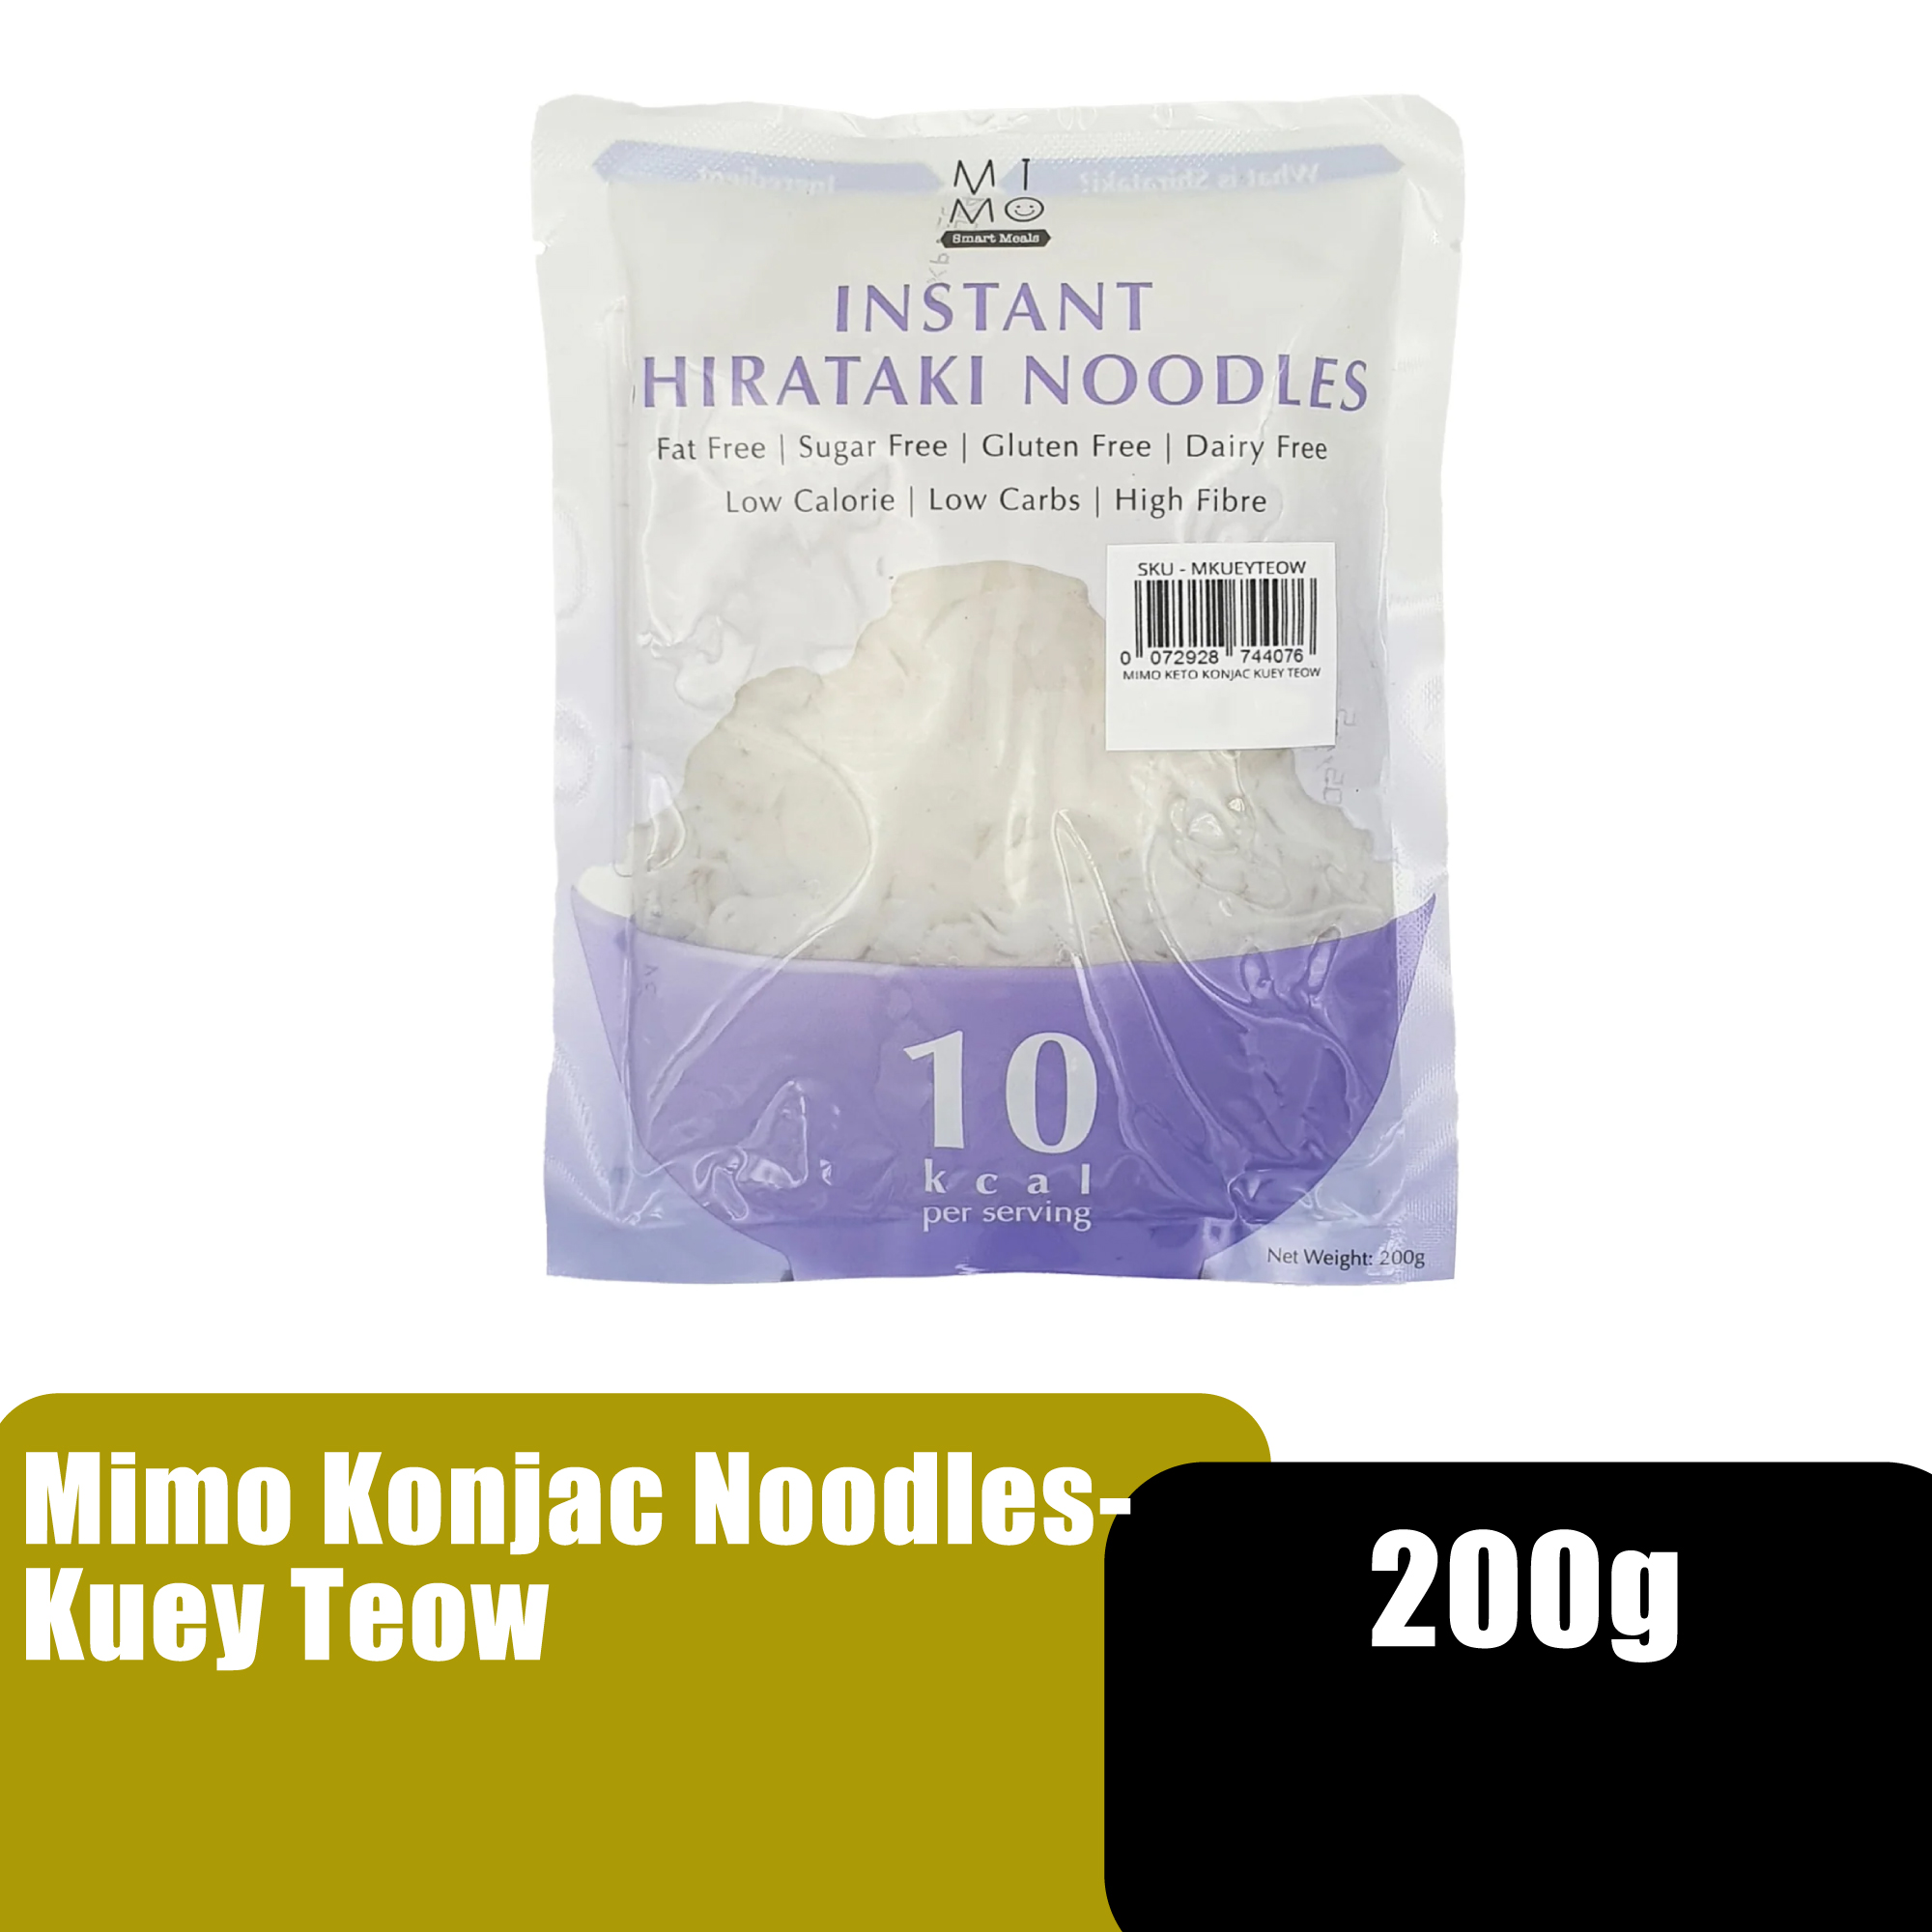 Mimo Konjac Noodles 200g - Kuey Teow (Thin)